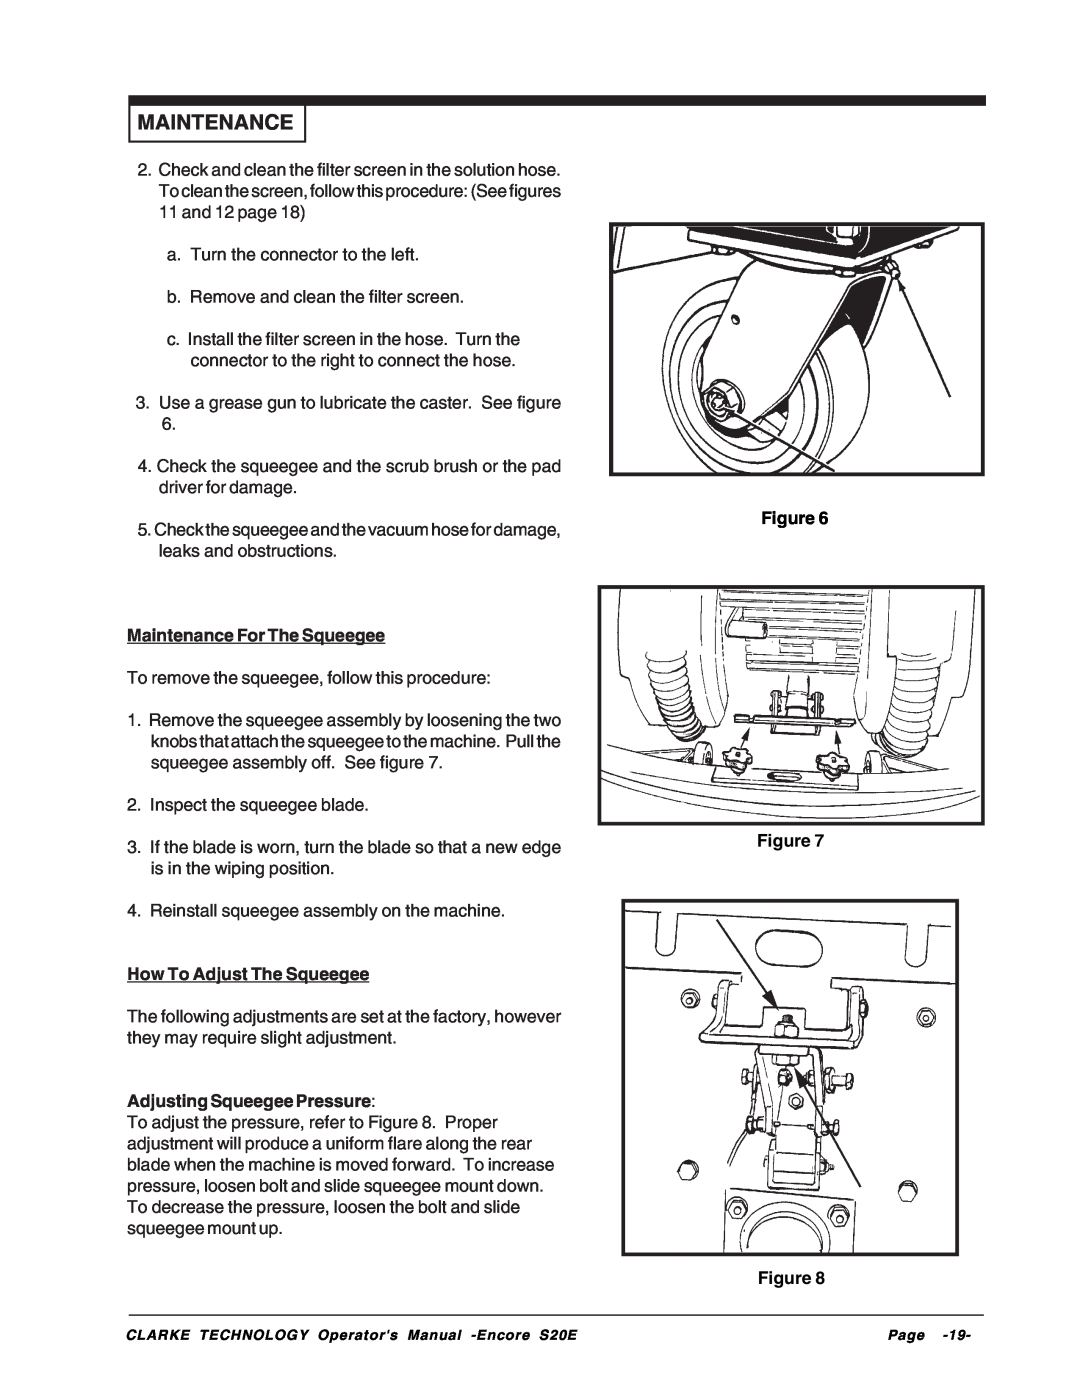 Clarke S20E manual Maintenance For The Squeegee, How To Adjust The Squeegee, Adjusting Squeegee Pressure, Figure Figure 